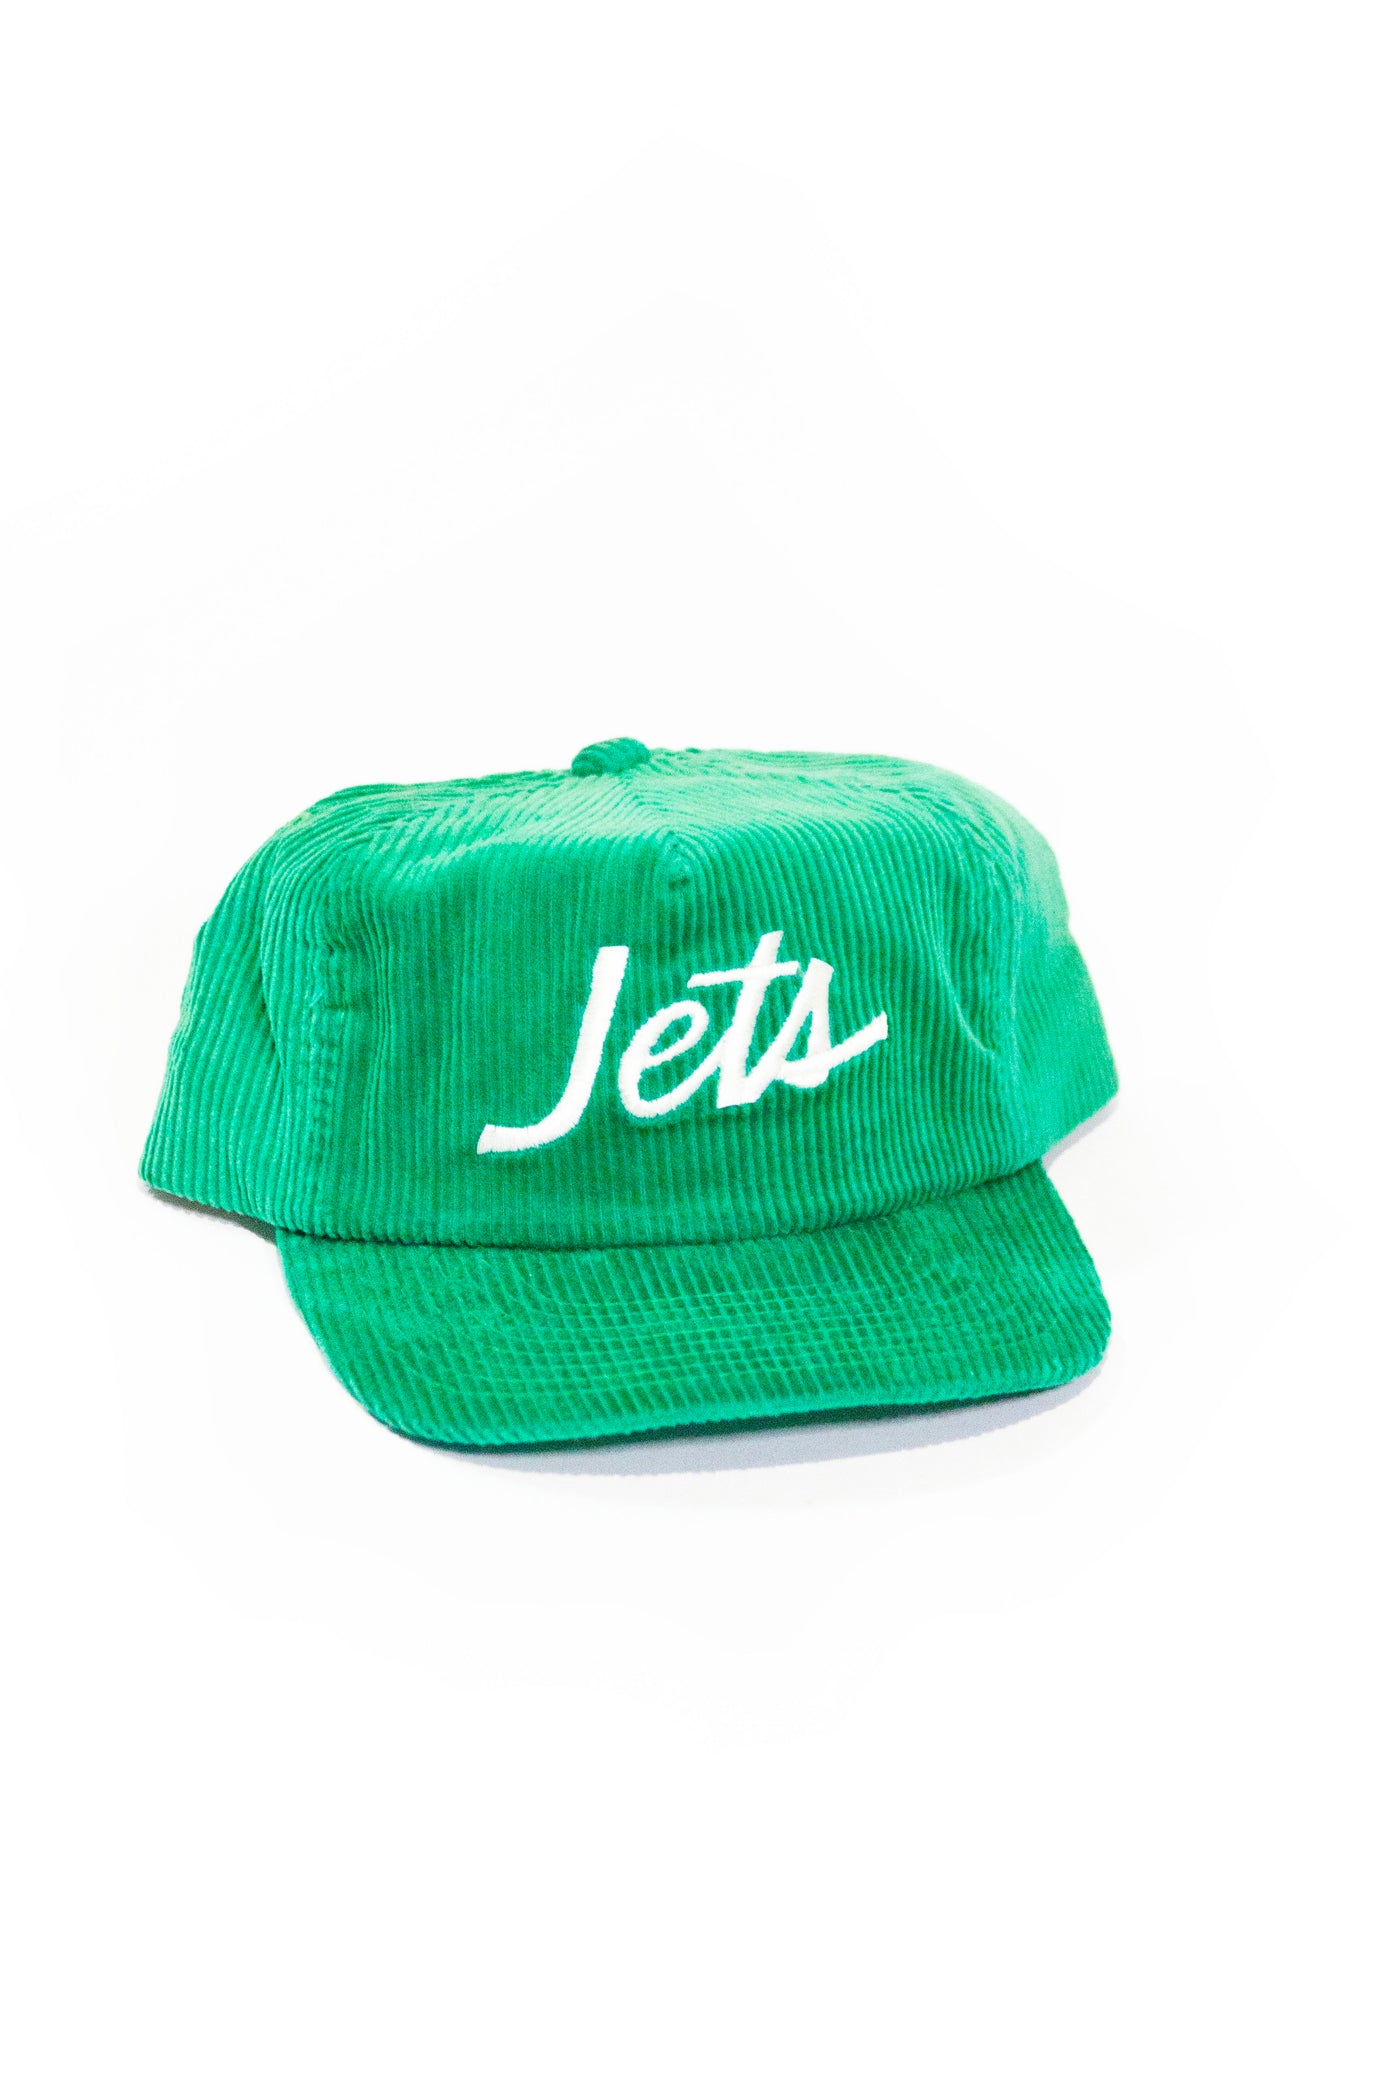 Vintage New York Jets Corduroy Sports Specialties Hat